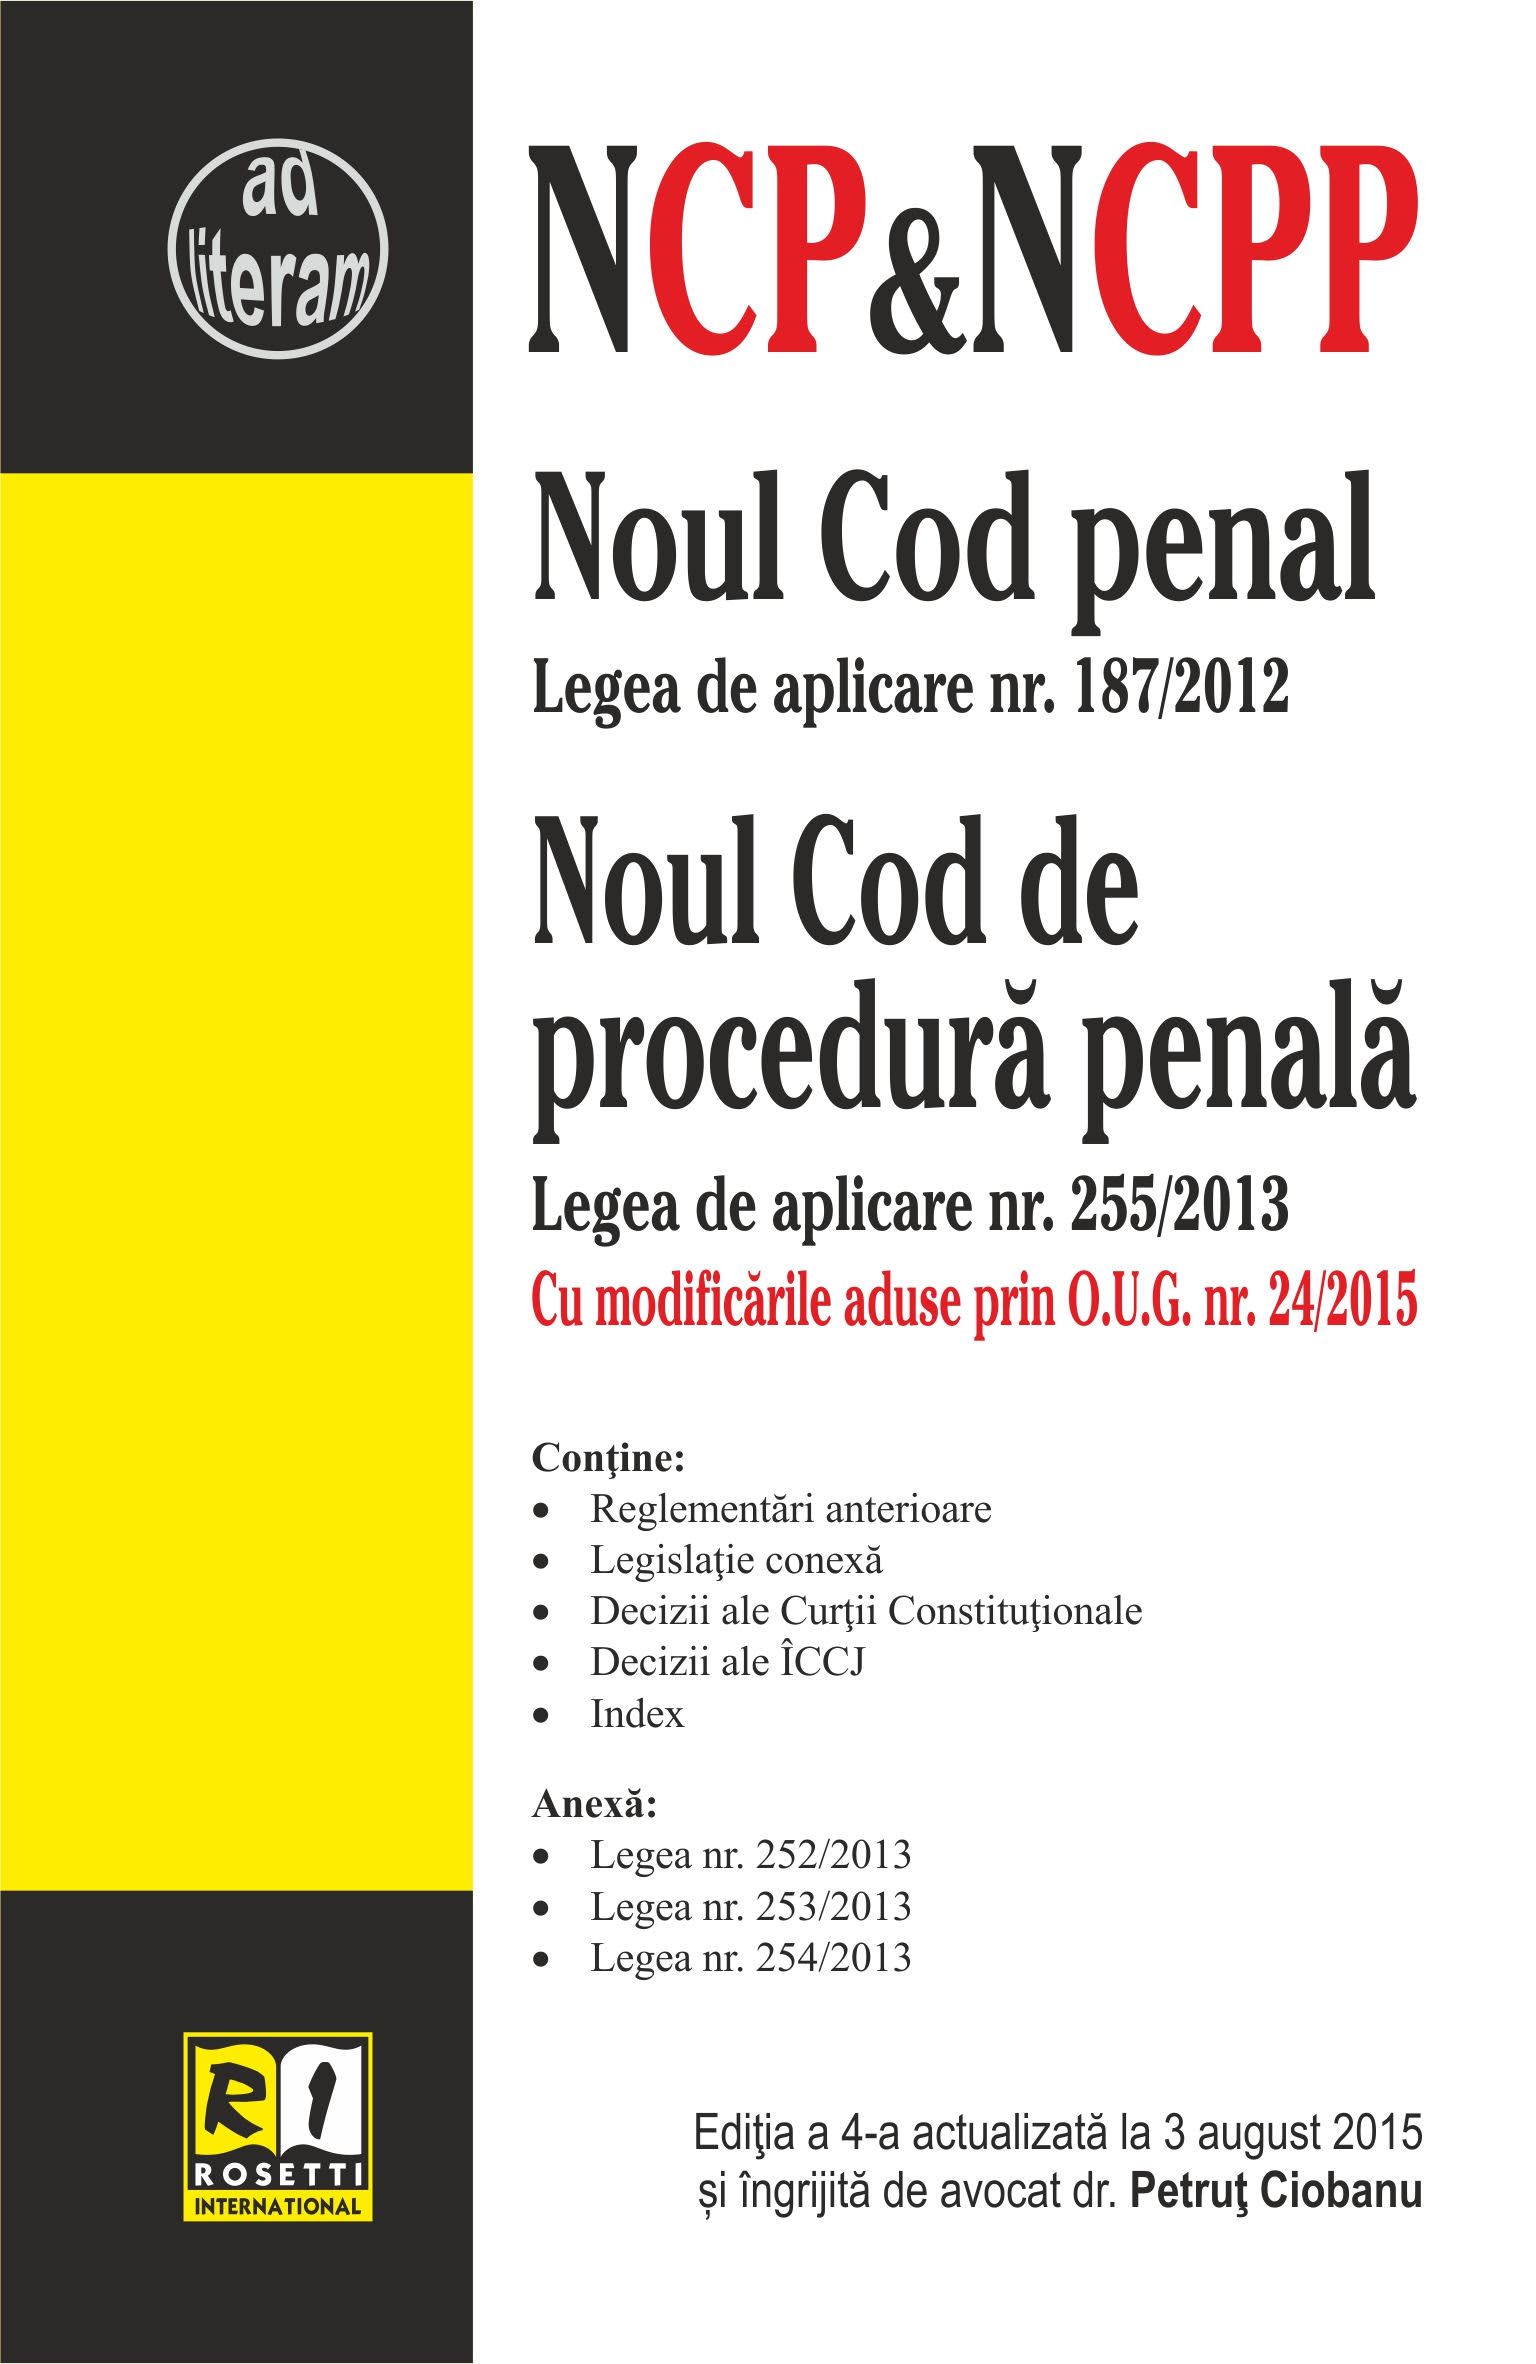 Noul Cod Penal. Noul Cod De Procedura Penala Ed.4 Act. 03.08.2015